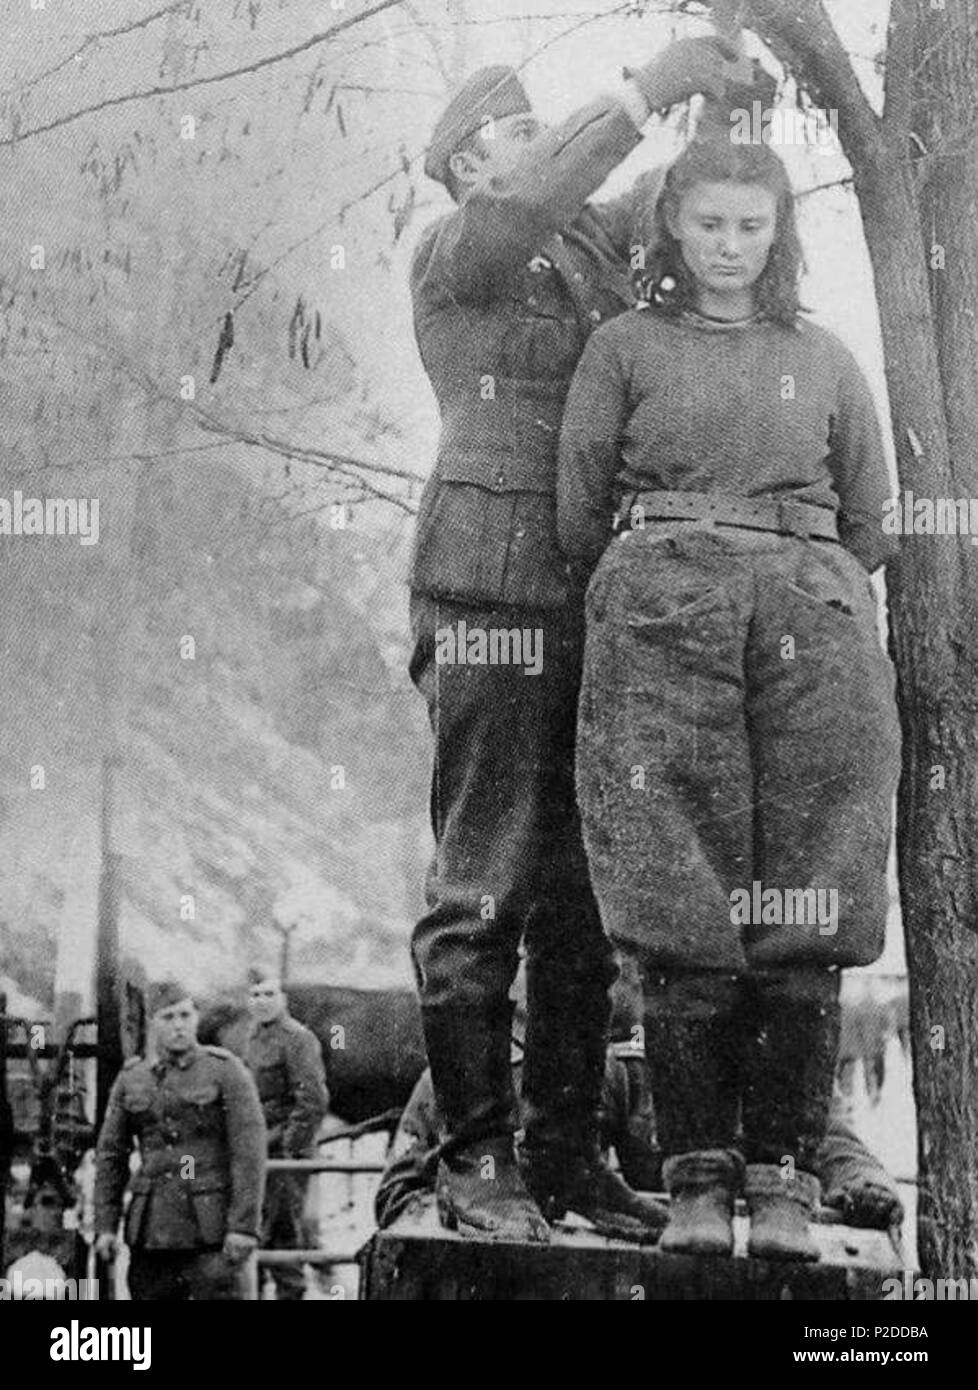 31 Lepa Radić Februara 1943 Foto de stock